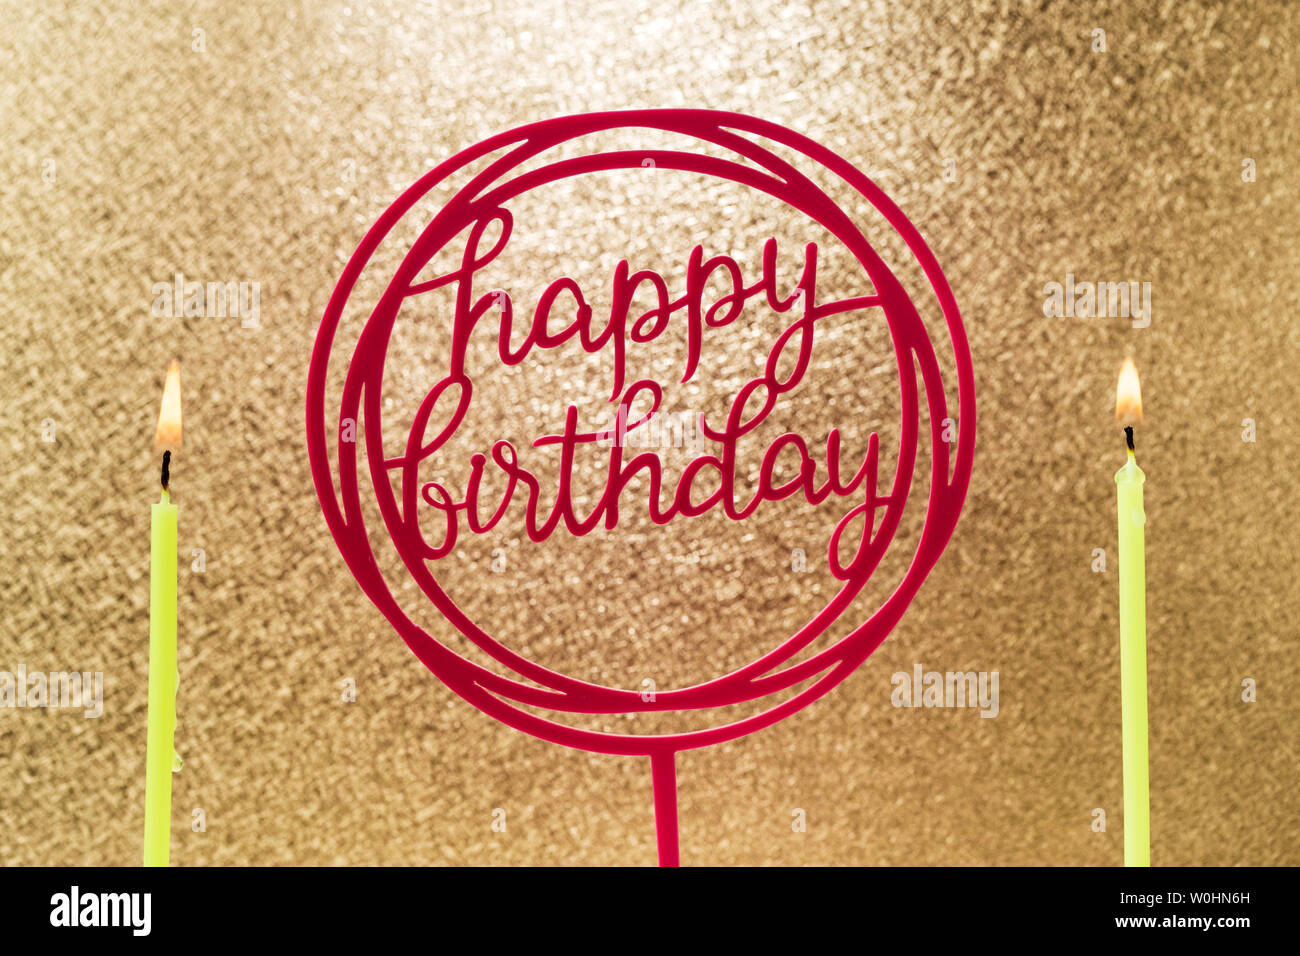 Happy birthday background Stock Photo - Alamy